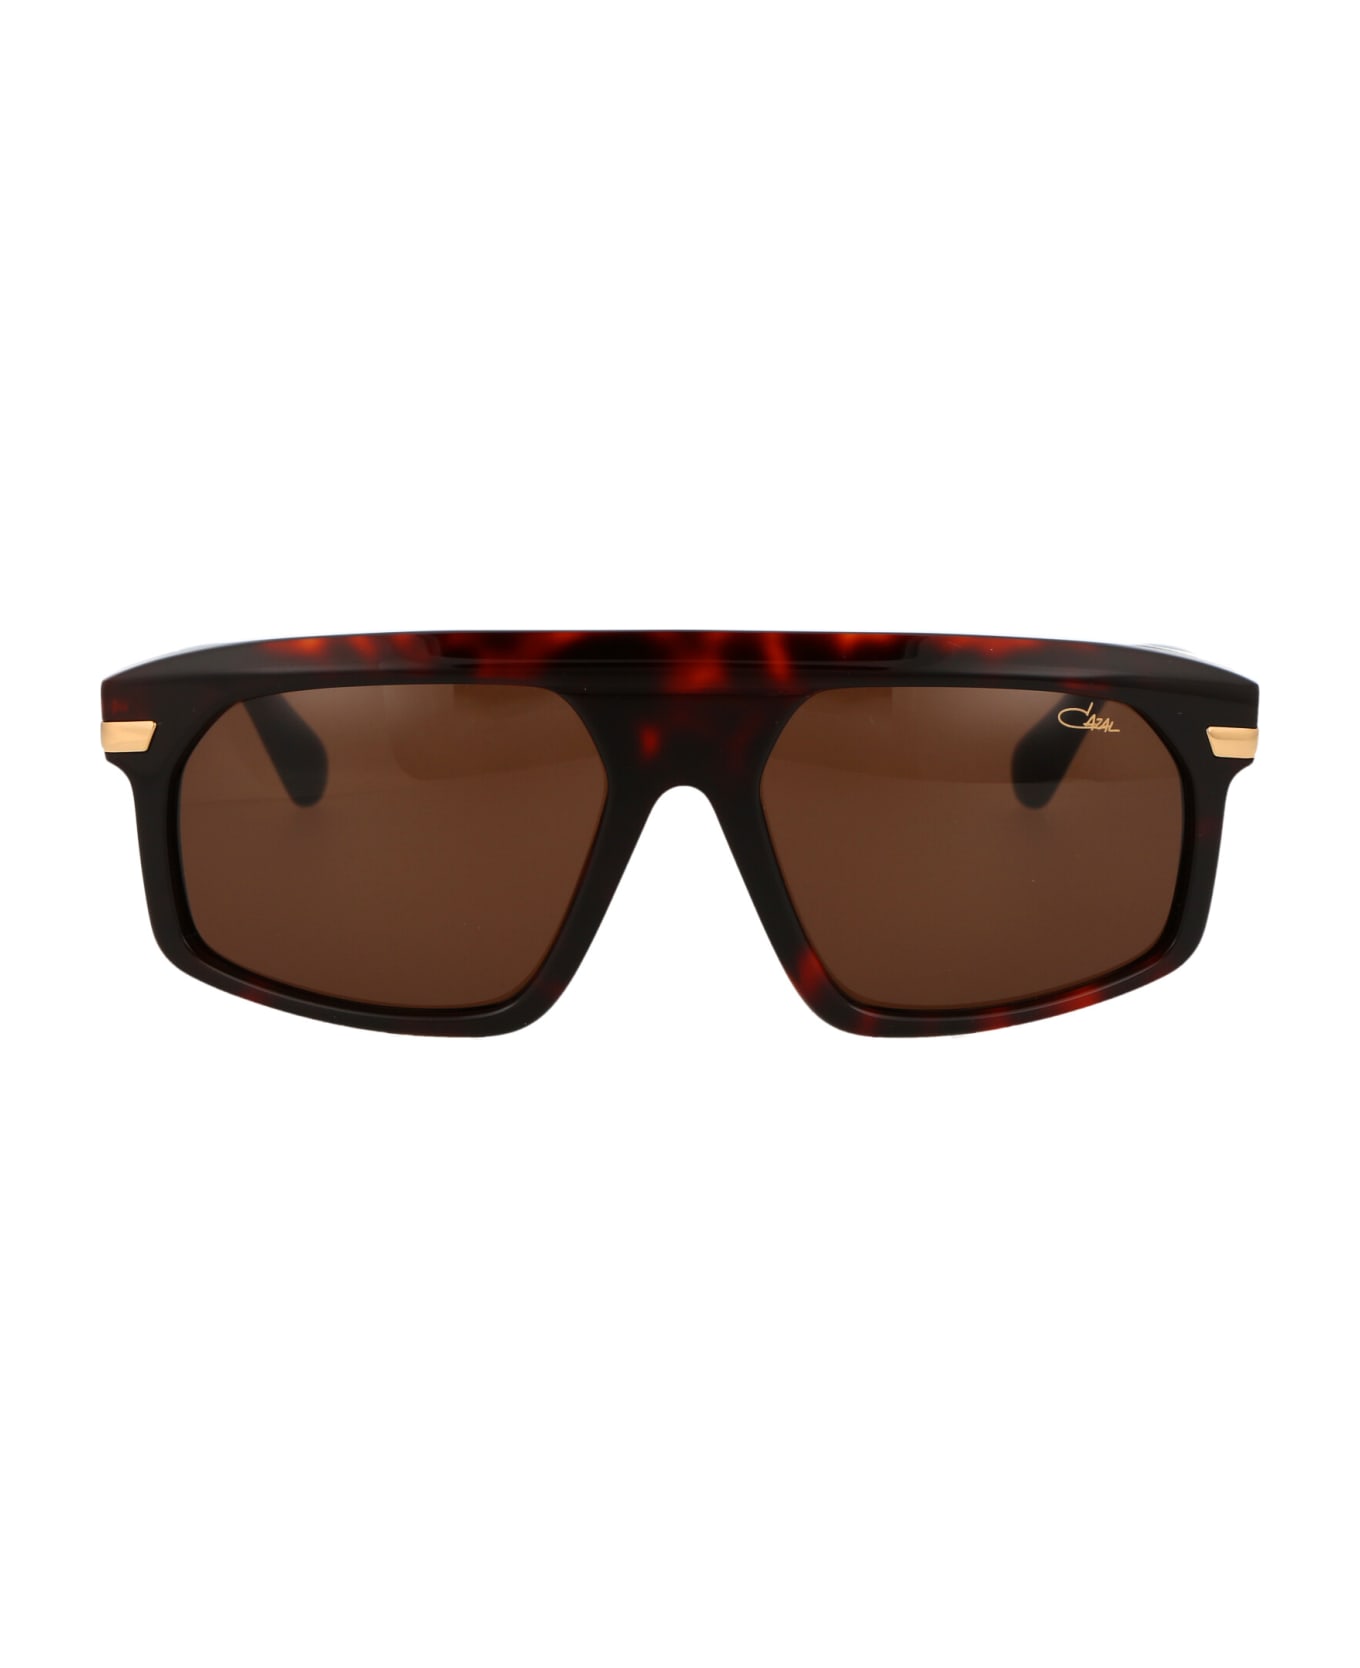 Cazal Mod. 8504 Sunglasses - 002 HAVANA